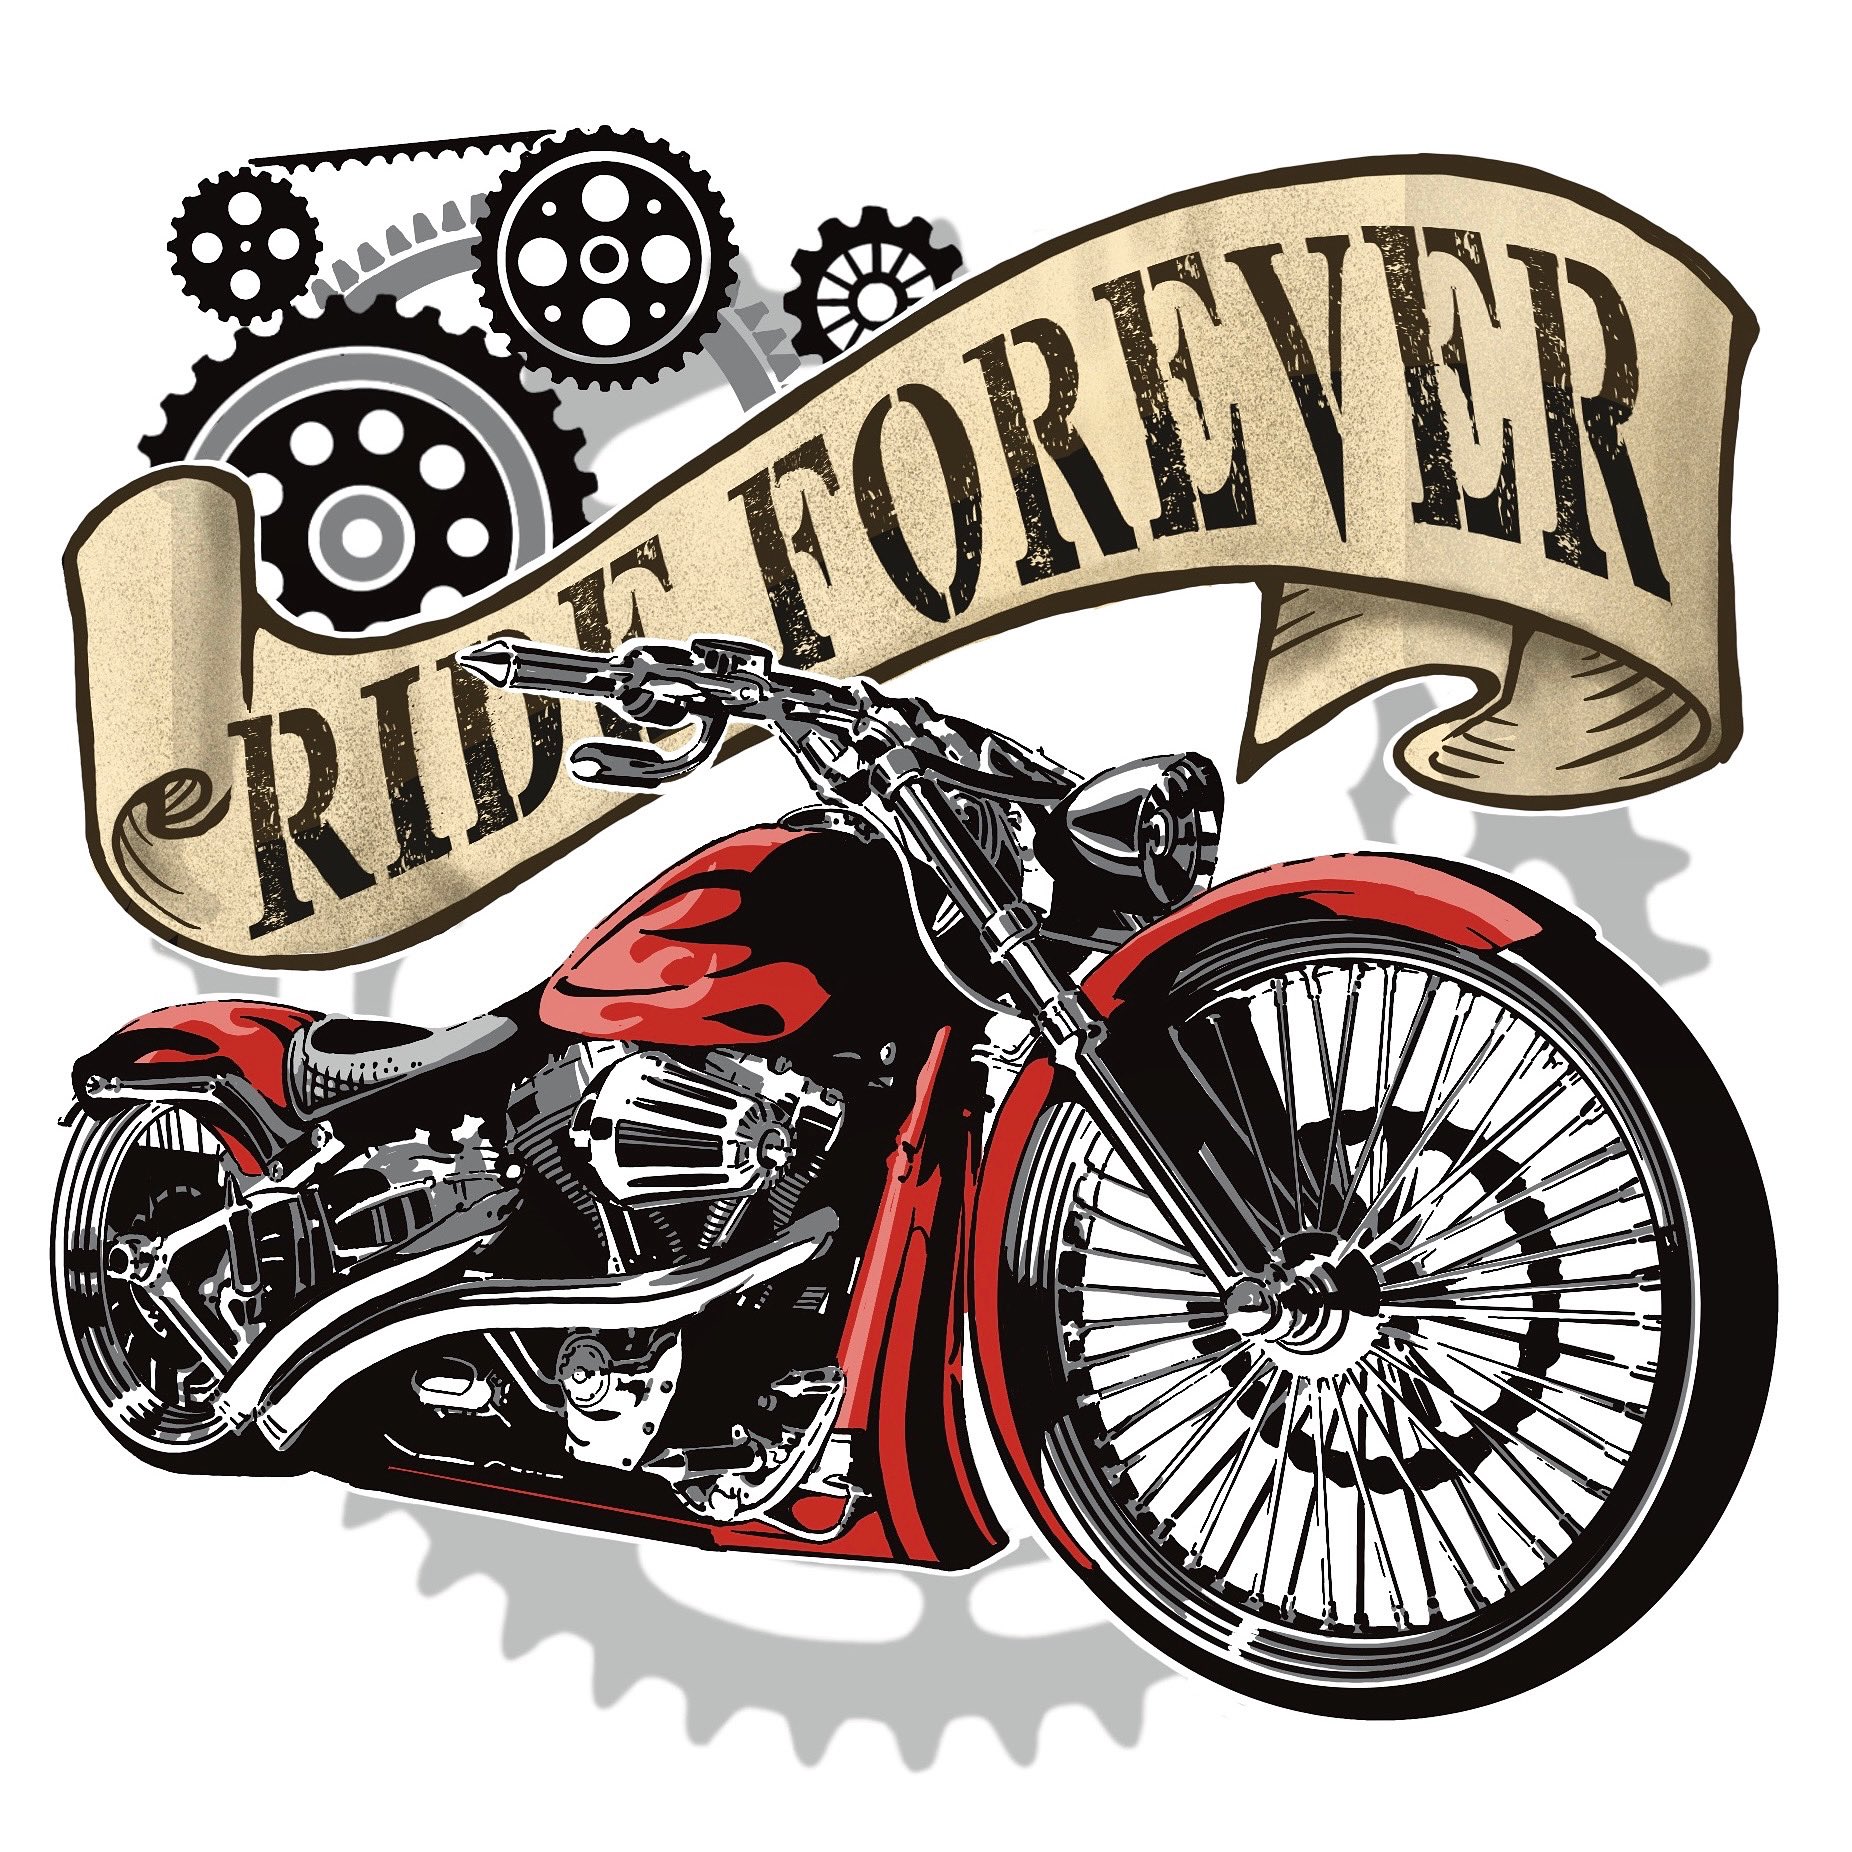 Twitter 上的 Lc Lastchapter イラスト Ride Forever バイクイラスト ハーレーダビッドソン ステッカーデザイン プロクリエイト T Co 7epucdtnix Twitter